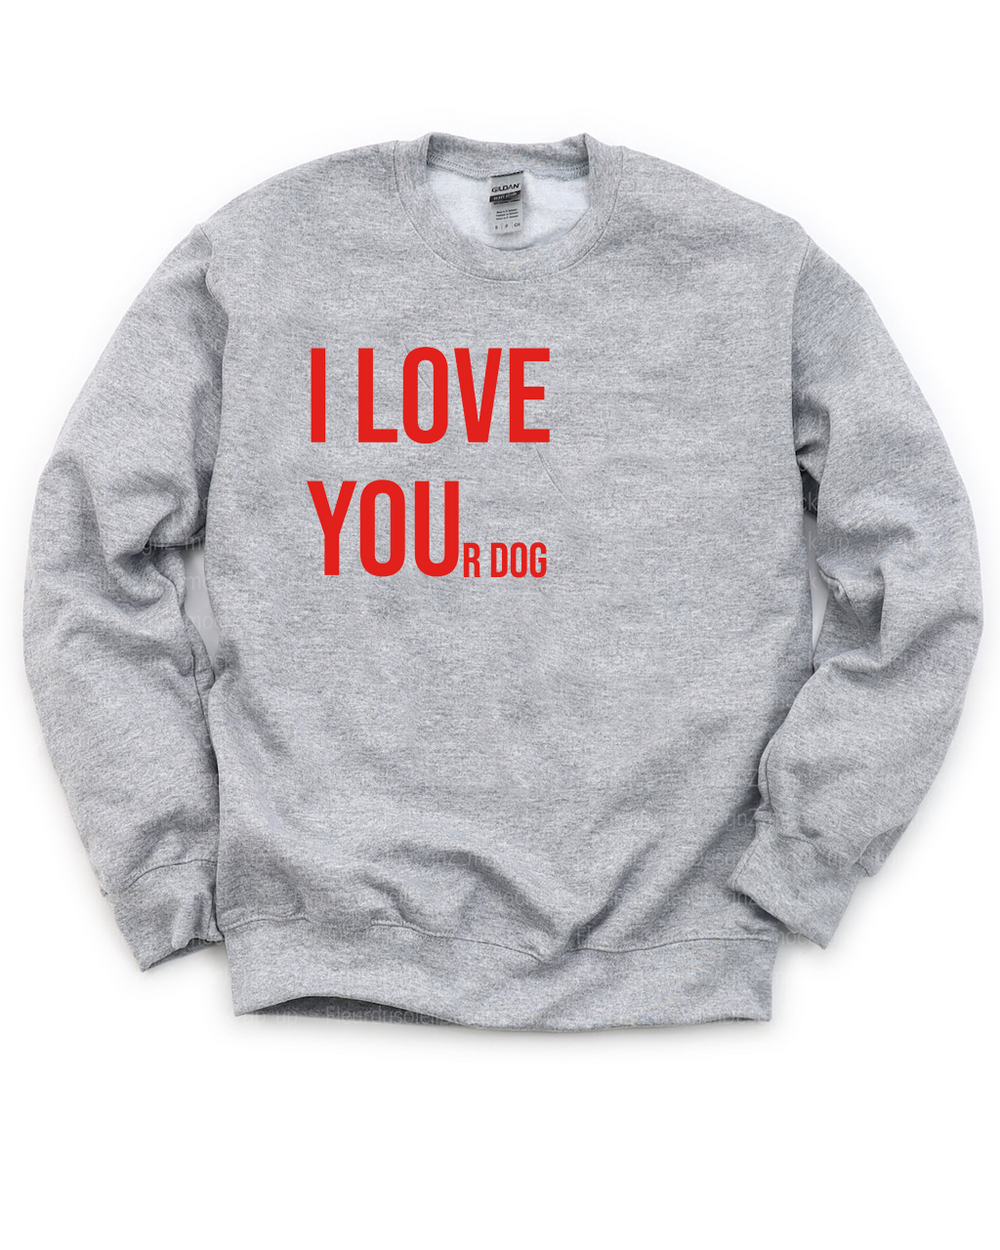 I Love Your Dog Sweatshirt - Treat Dreams